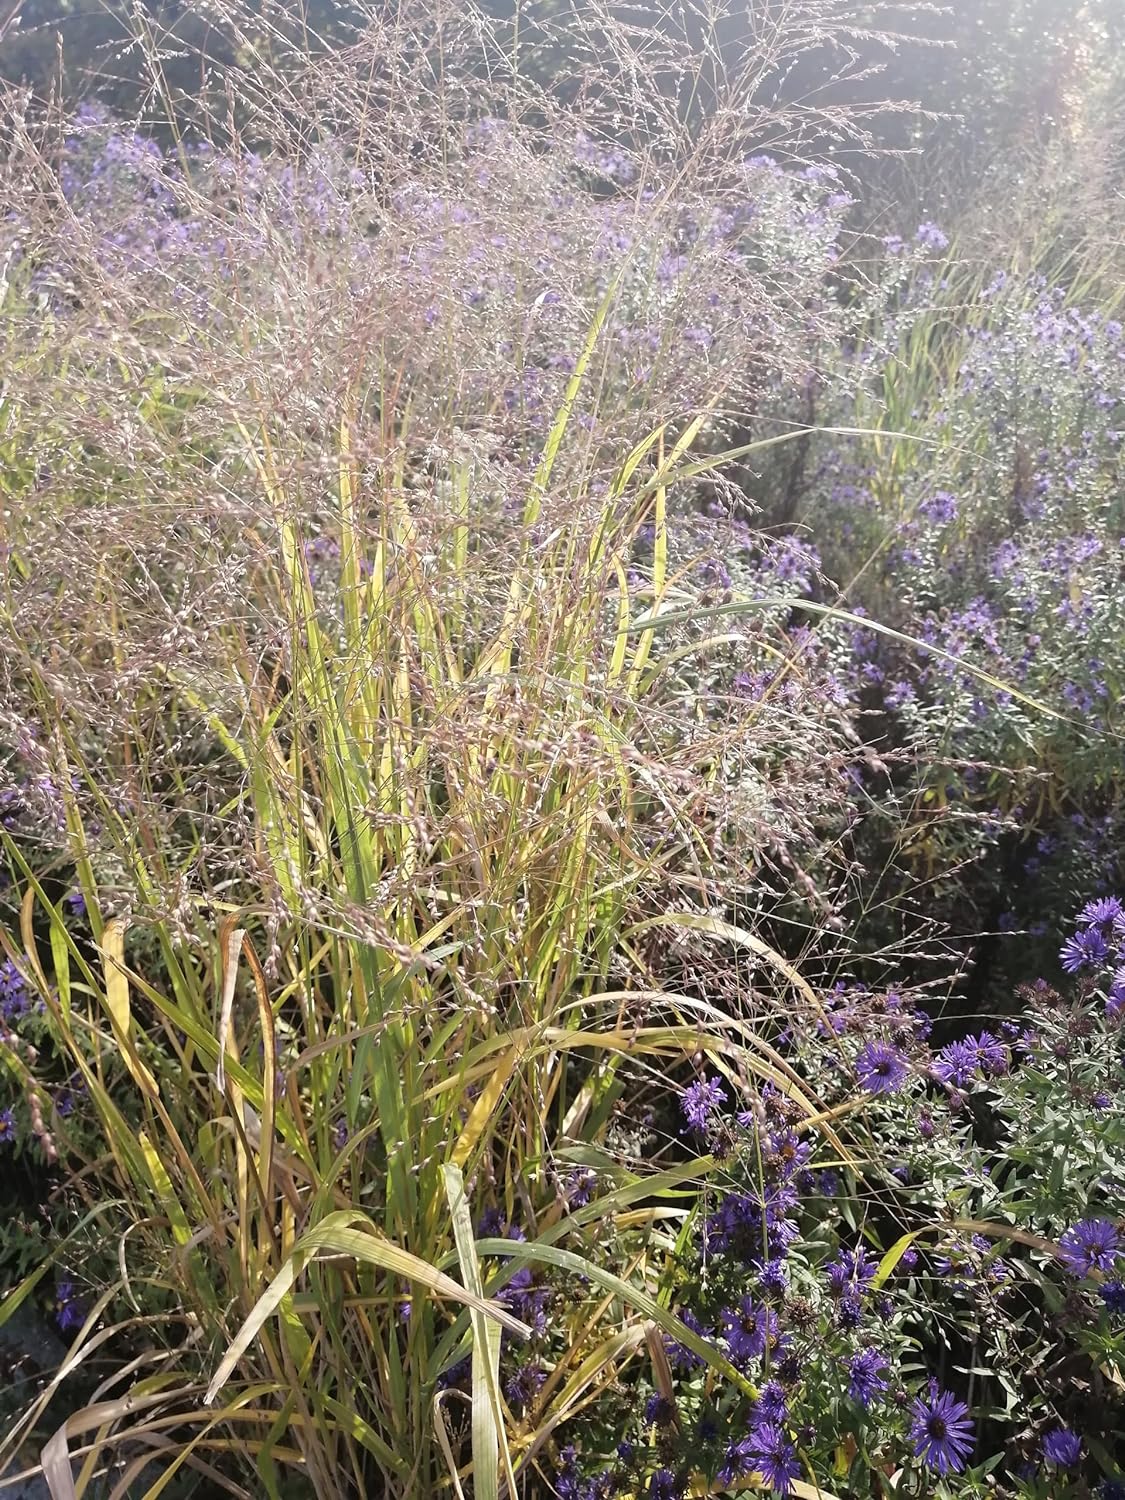 Hundredfold 500 Switchgrass Switch Grass Seeds - Panicum virgatum Ornamental Bunch Grasses, Attract Birds, Valued for Native Garden & Wildflower Meadow